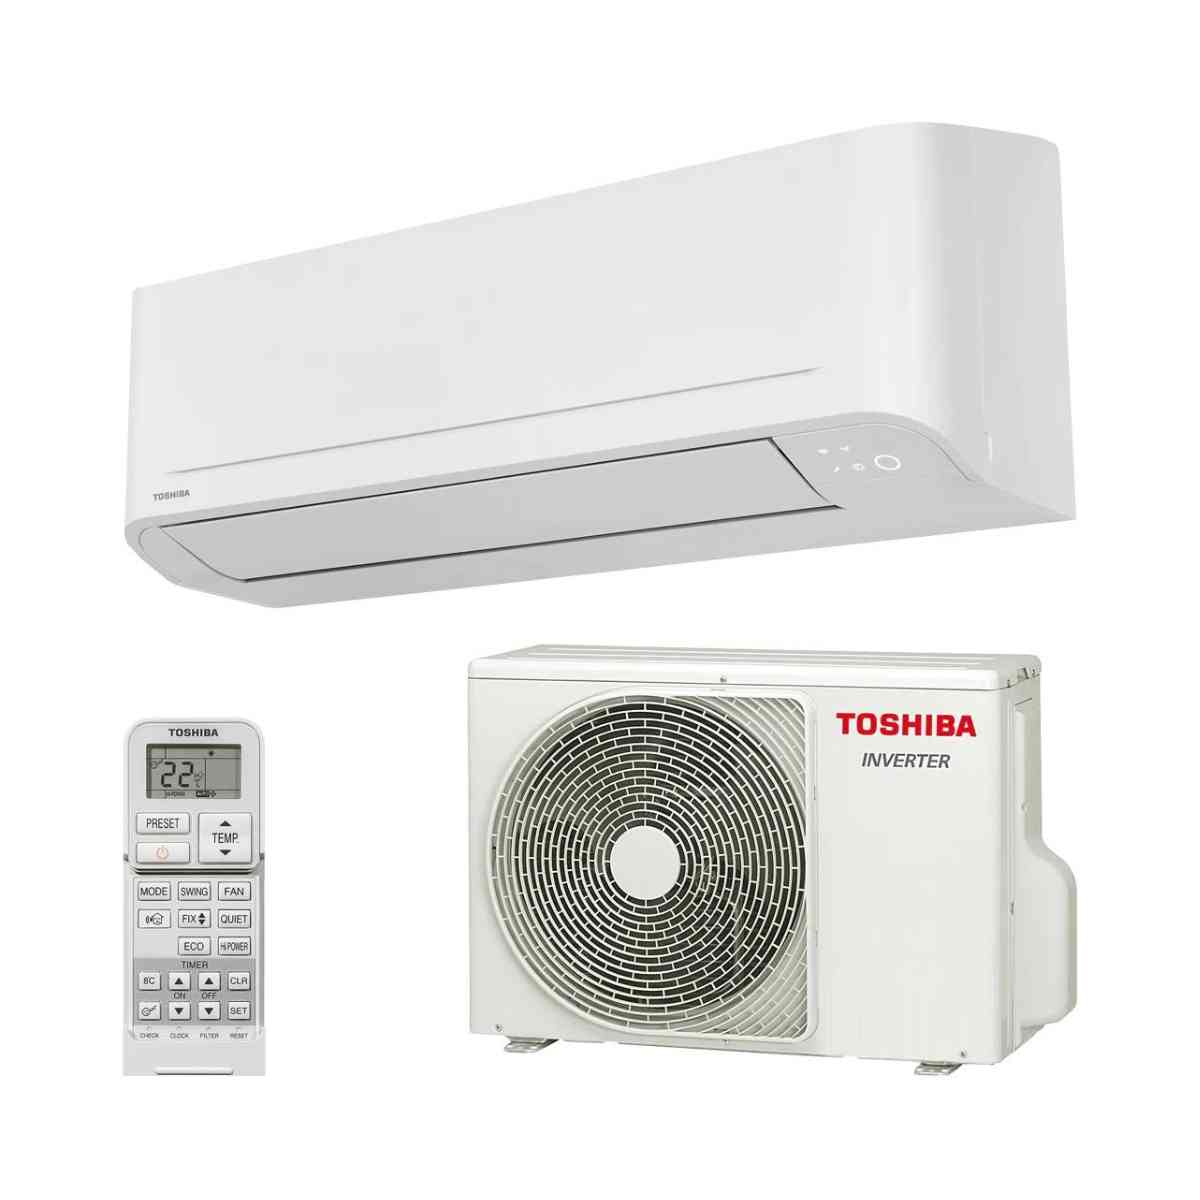 Ar condicionado fixo 1x1 Toshiba Seiya+ 24 6,5 kW 22000 BTU com referência SEIYA+ 24 da marca TOSHIBA